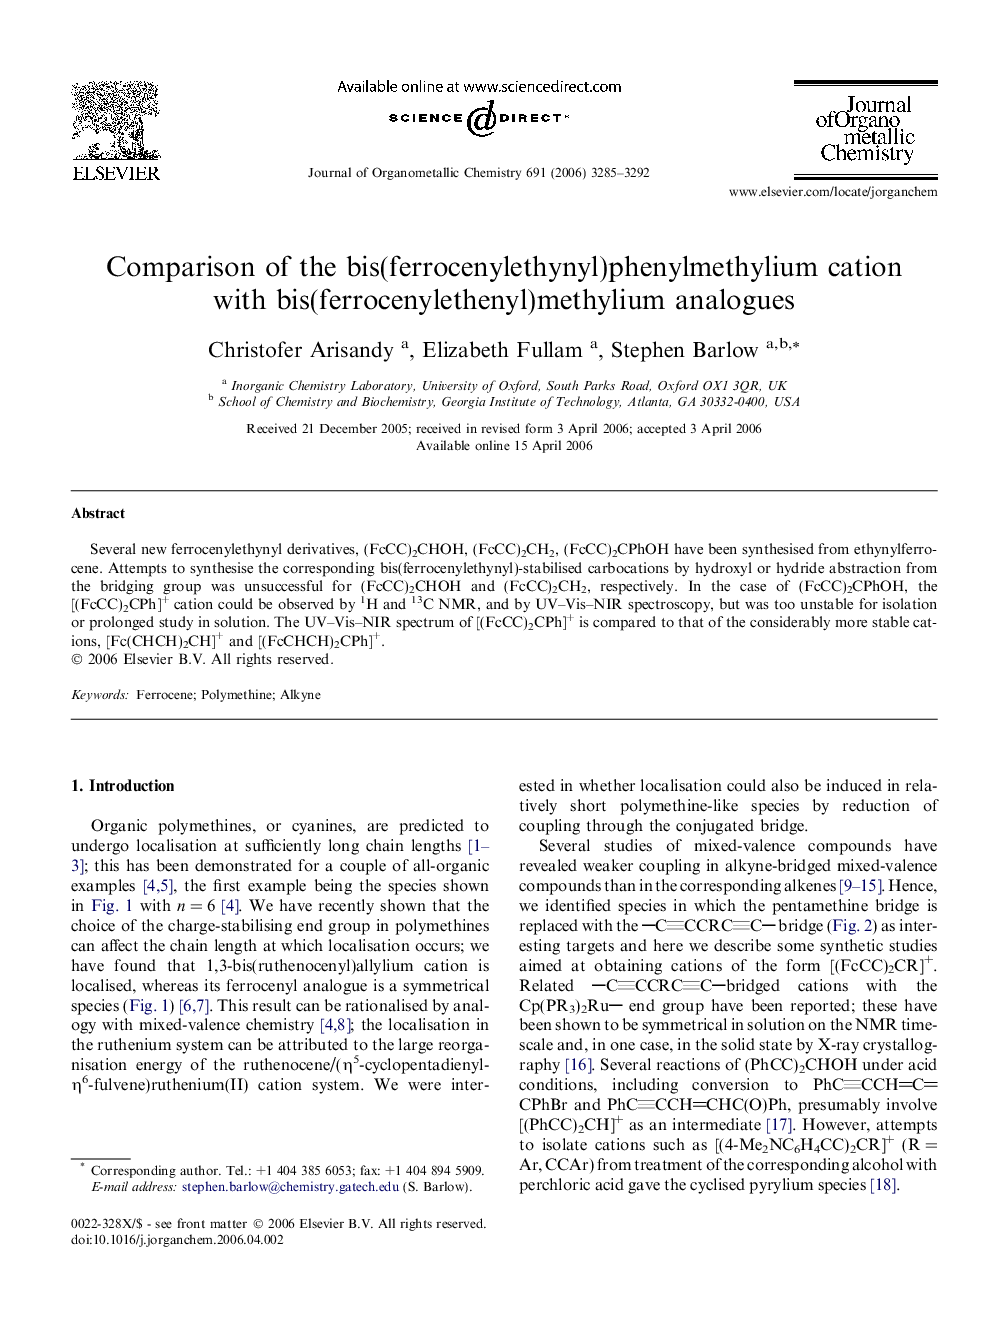 Comparison of the bis(ferrocenylethynyl)phenylmethylium cation with bis(ferrocenylethenyl)methylium analogues